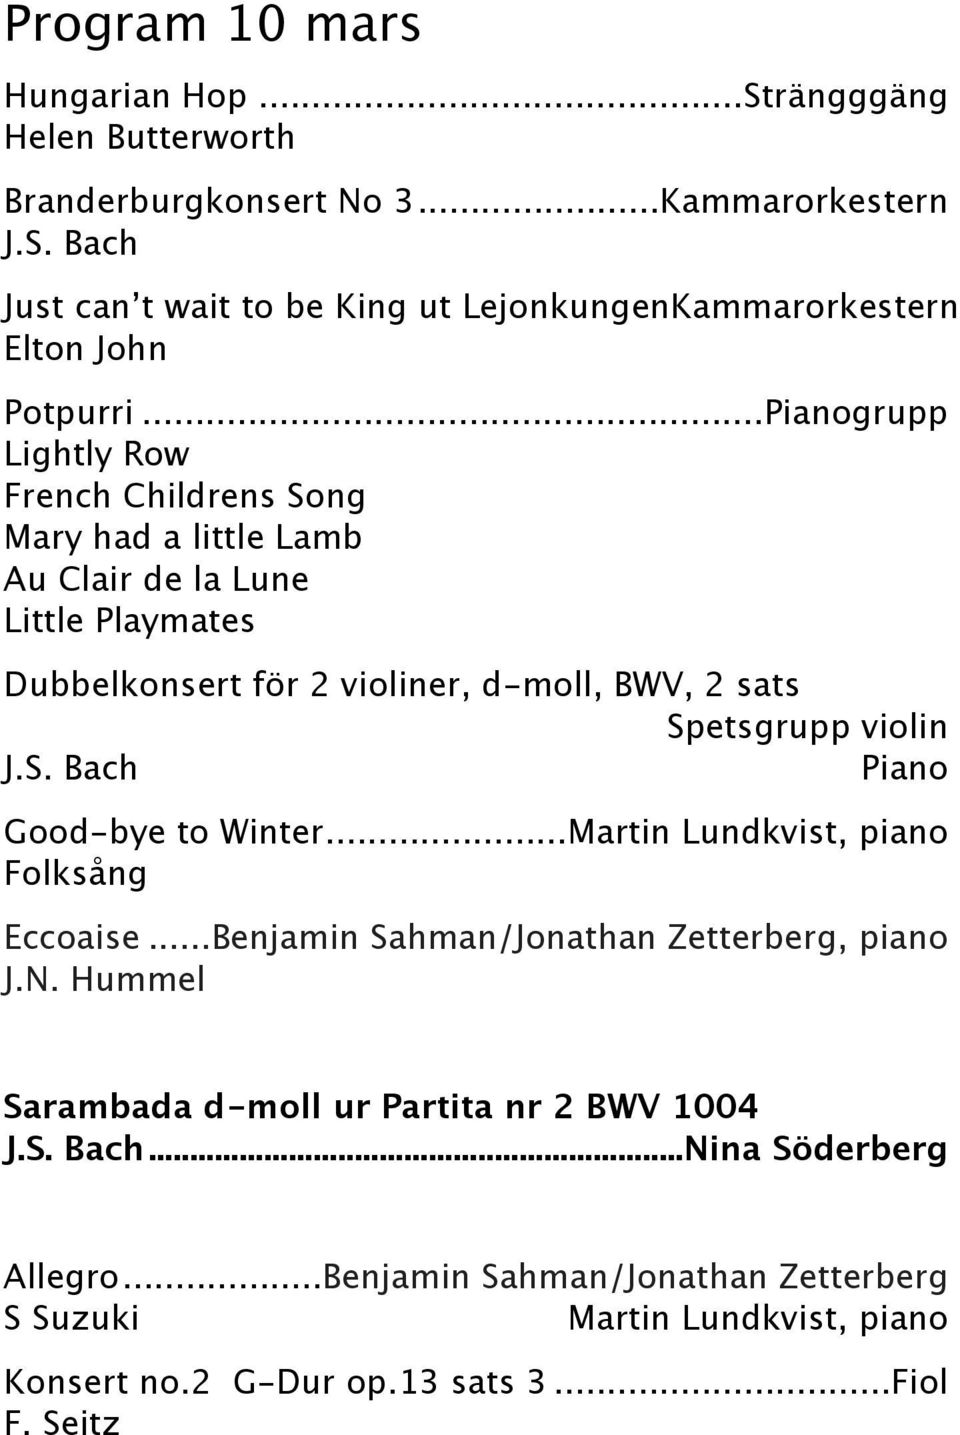 S. Bach Piano Good-bye to Winter... Martin Lundkvist, piano Folksång Eccoaise... Benjamin Sahman/Jonathan Zetterberg, piano J.N.